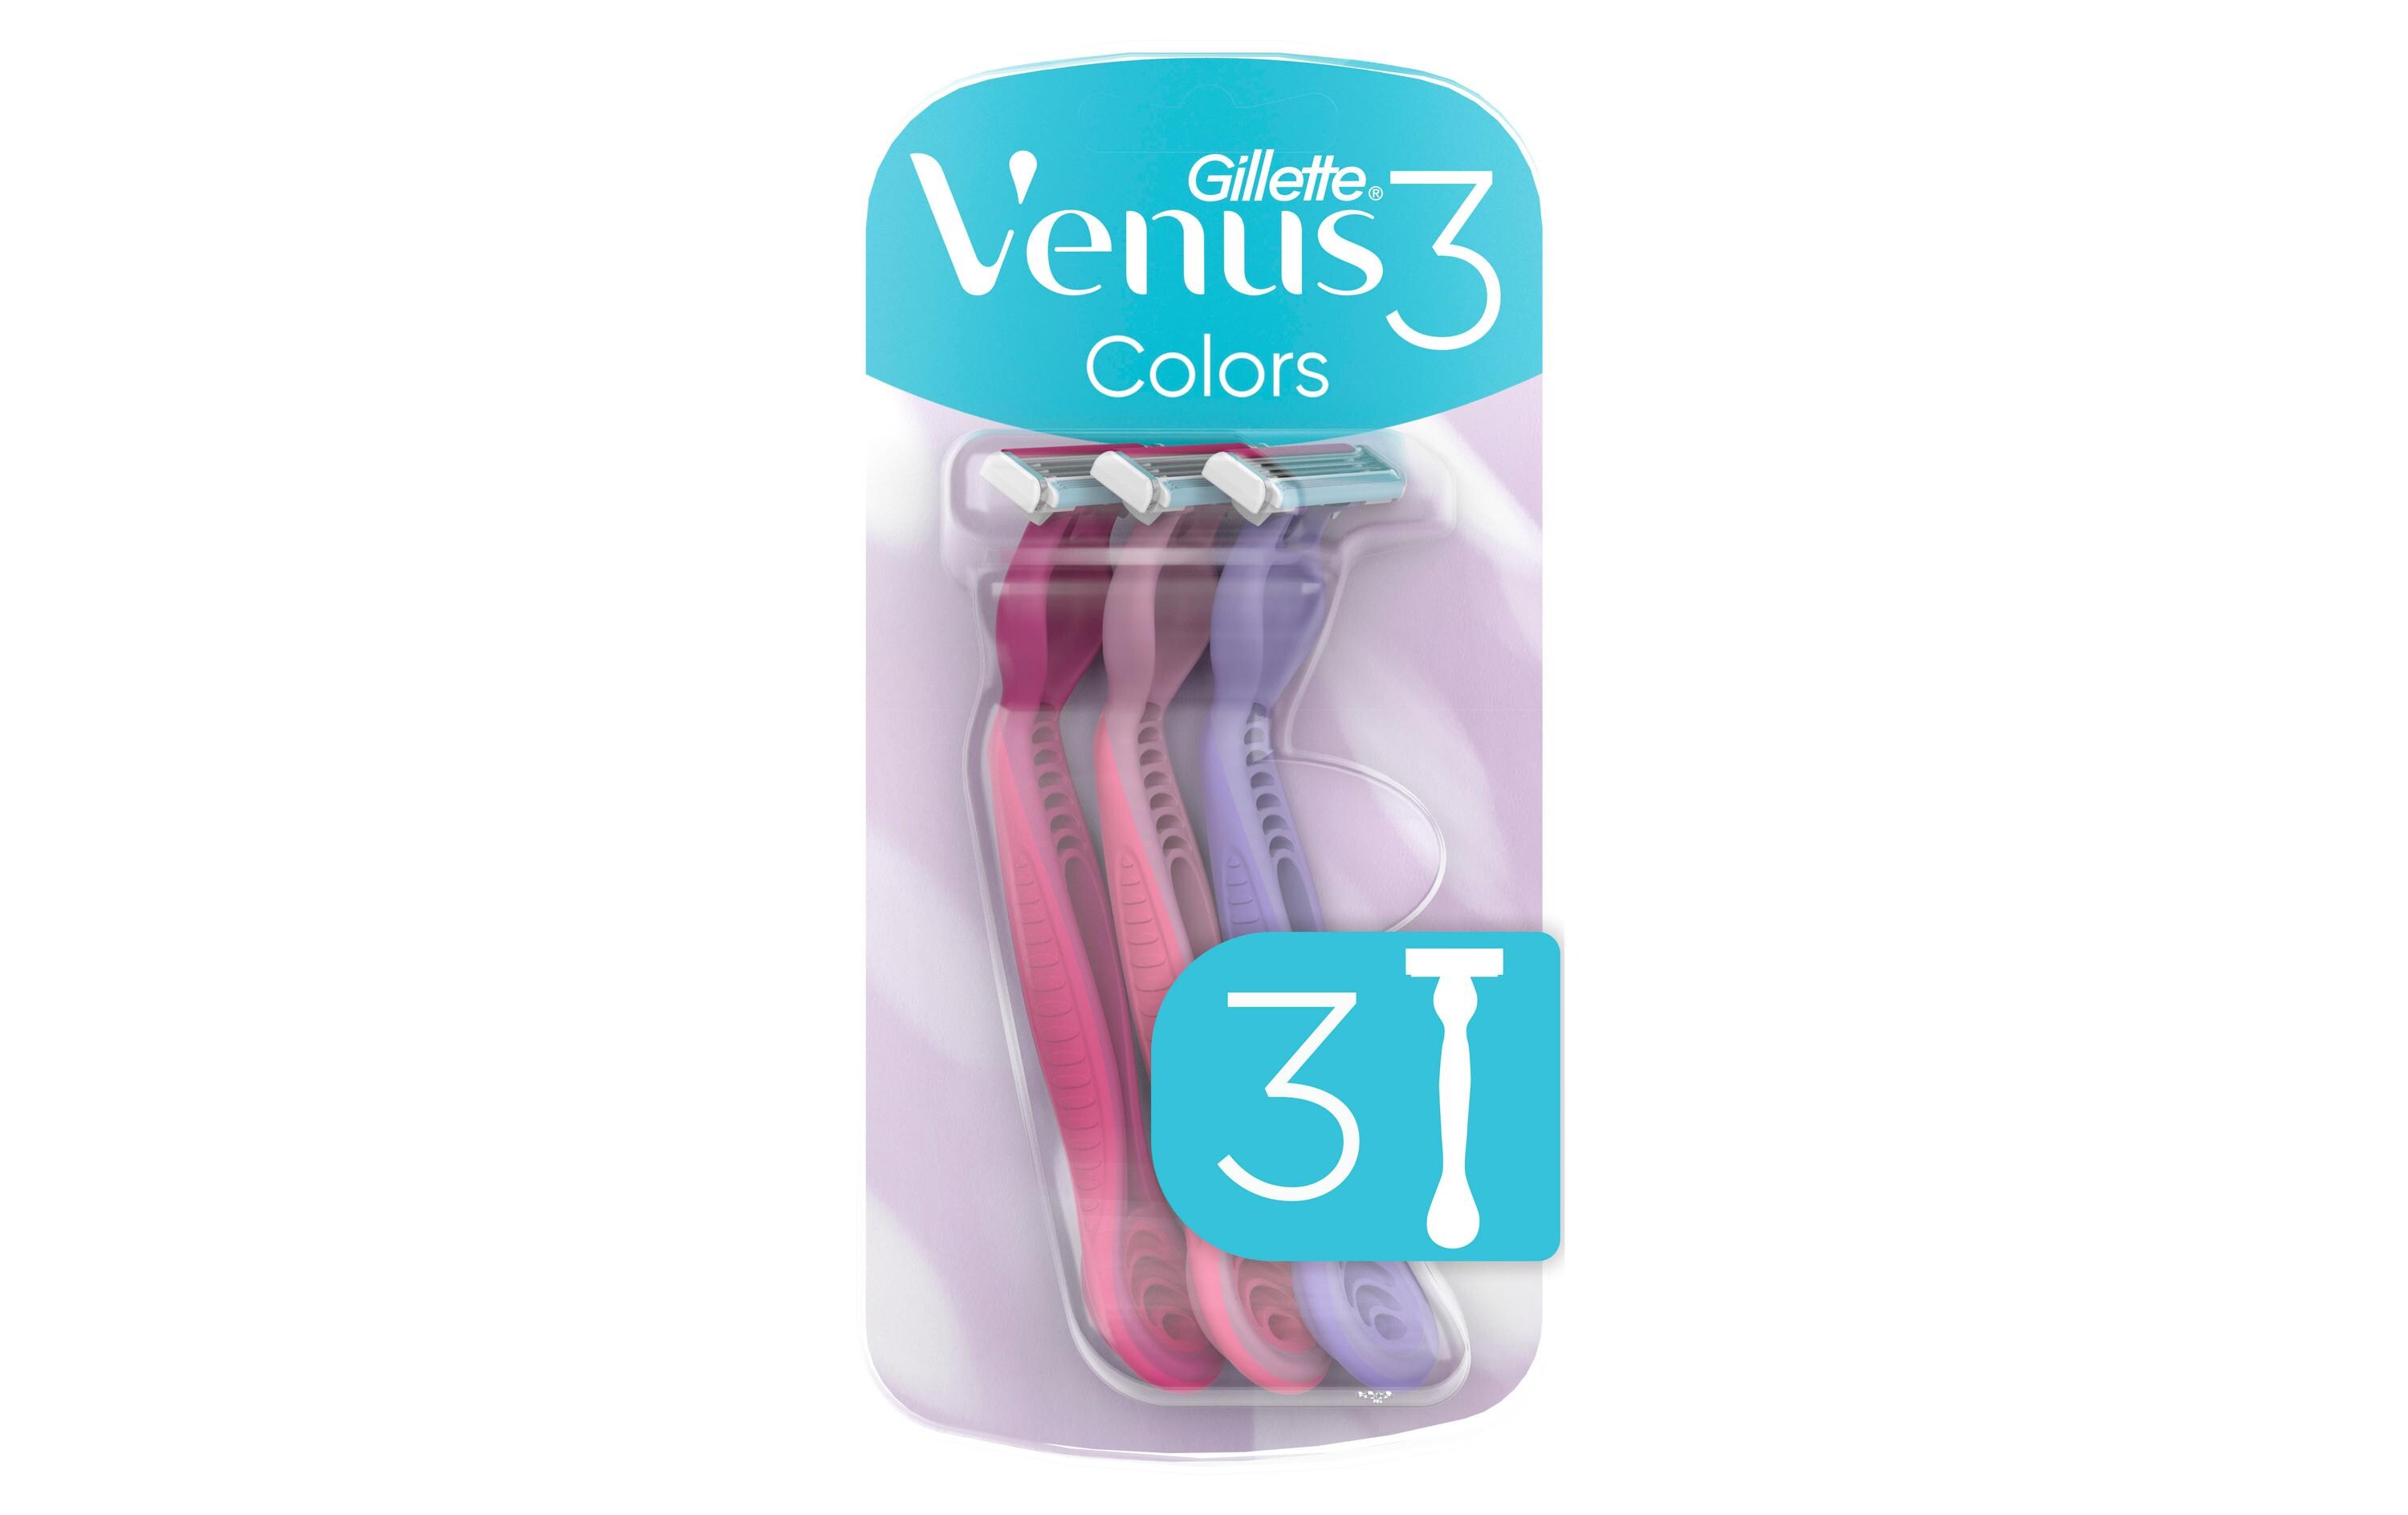 Gillette Venus Einwegrasierer 3 Colors 3 Stück